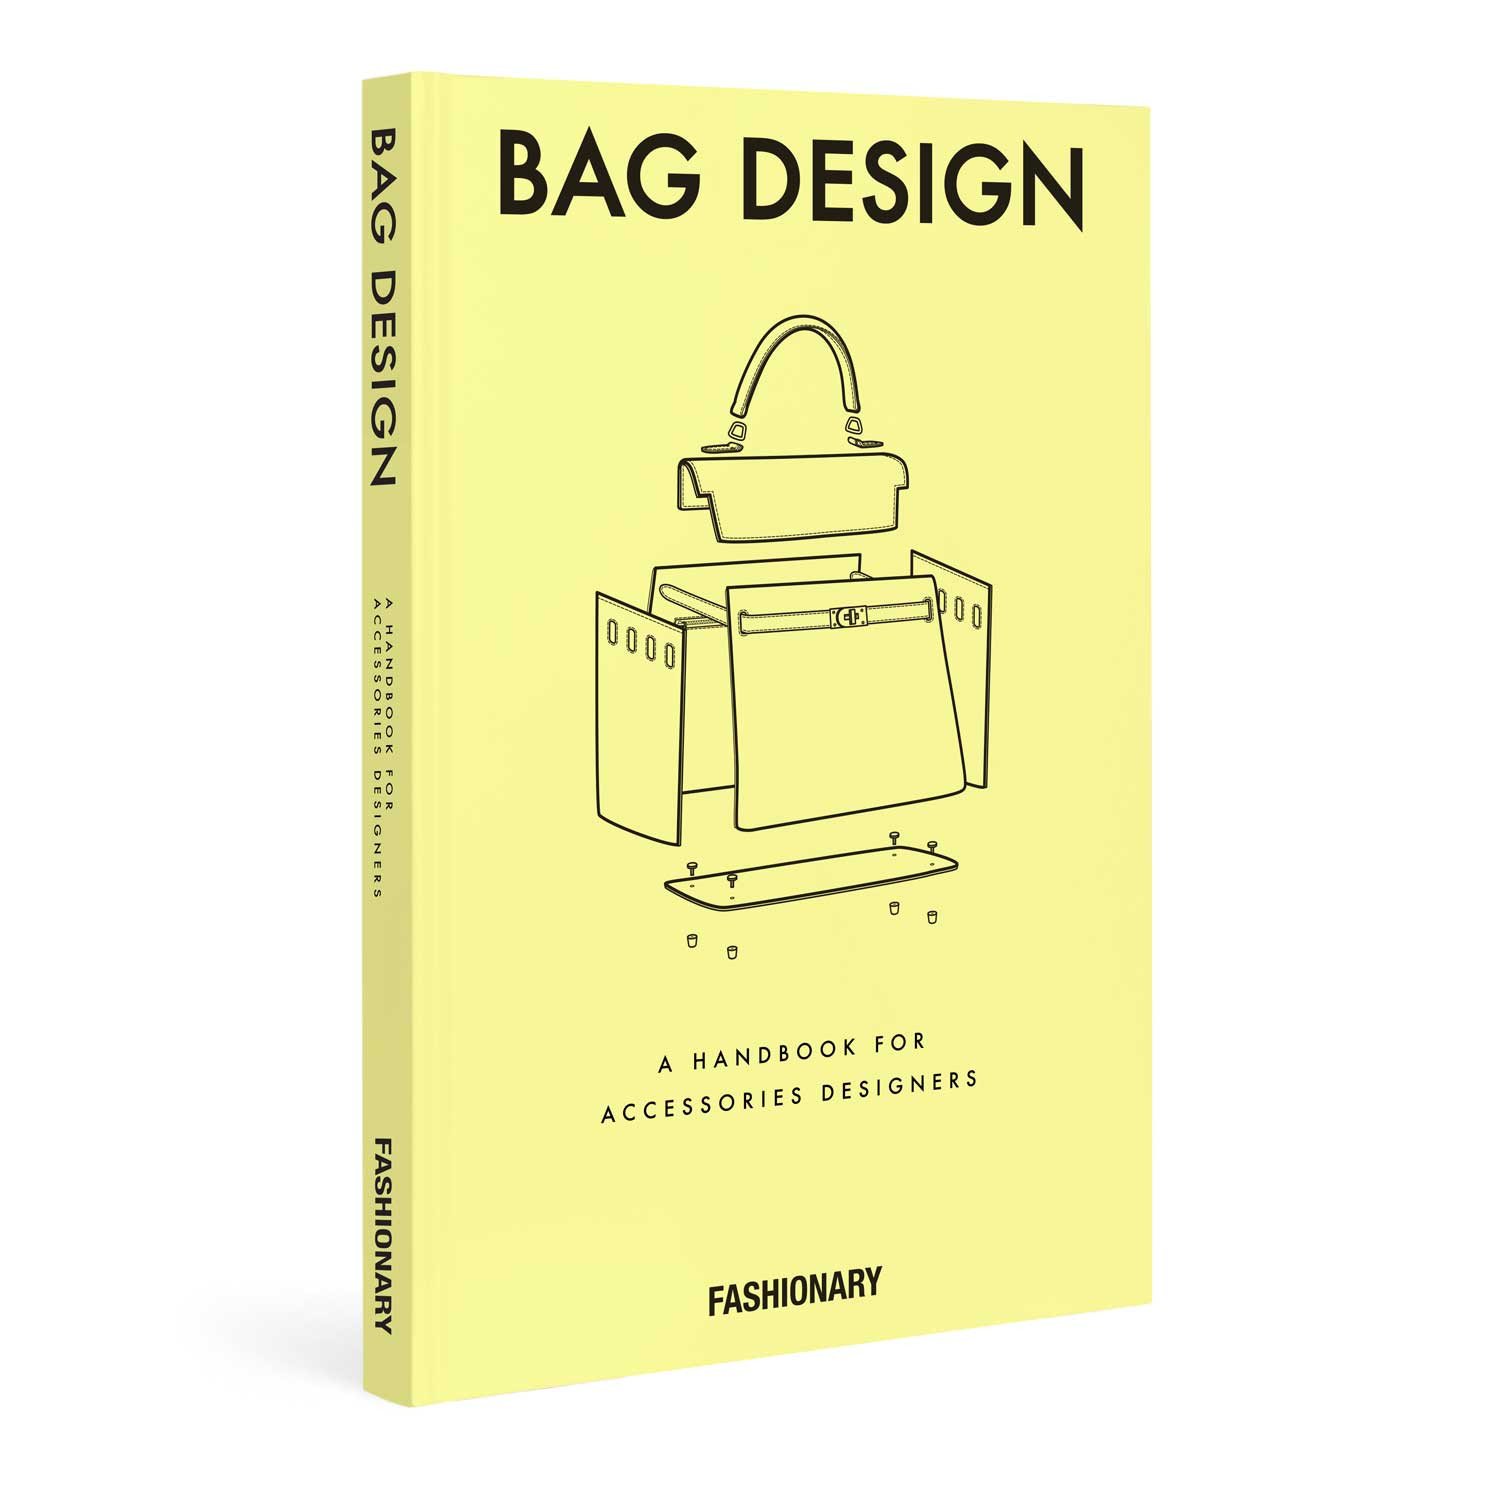 bag design book review